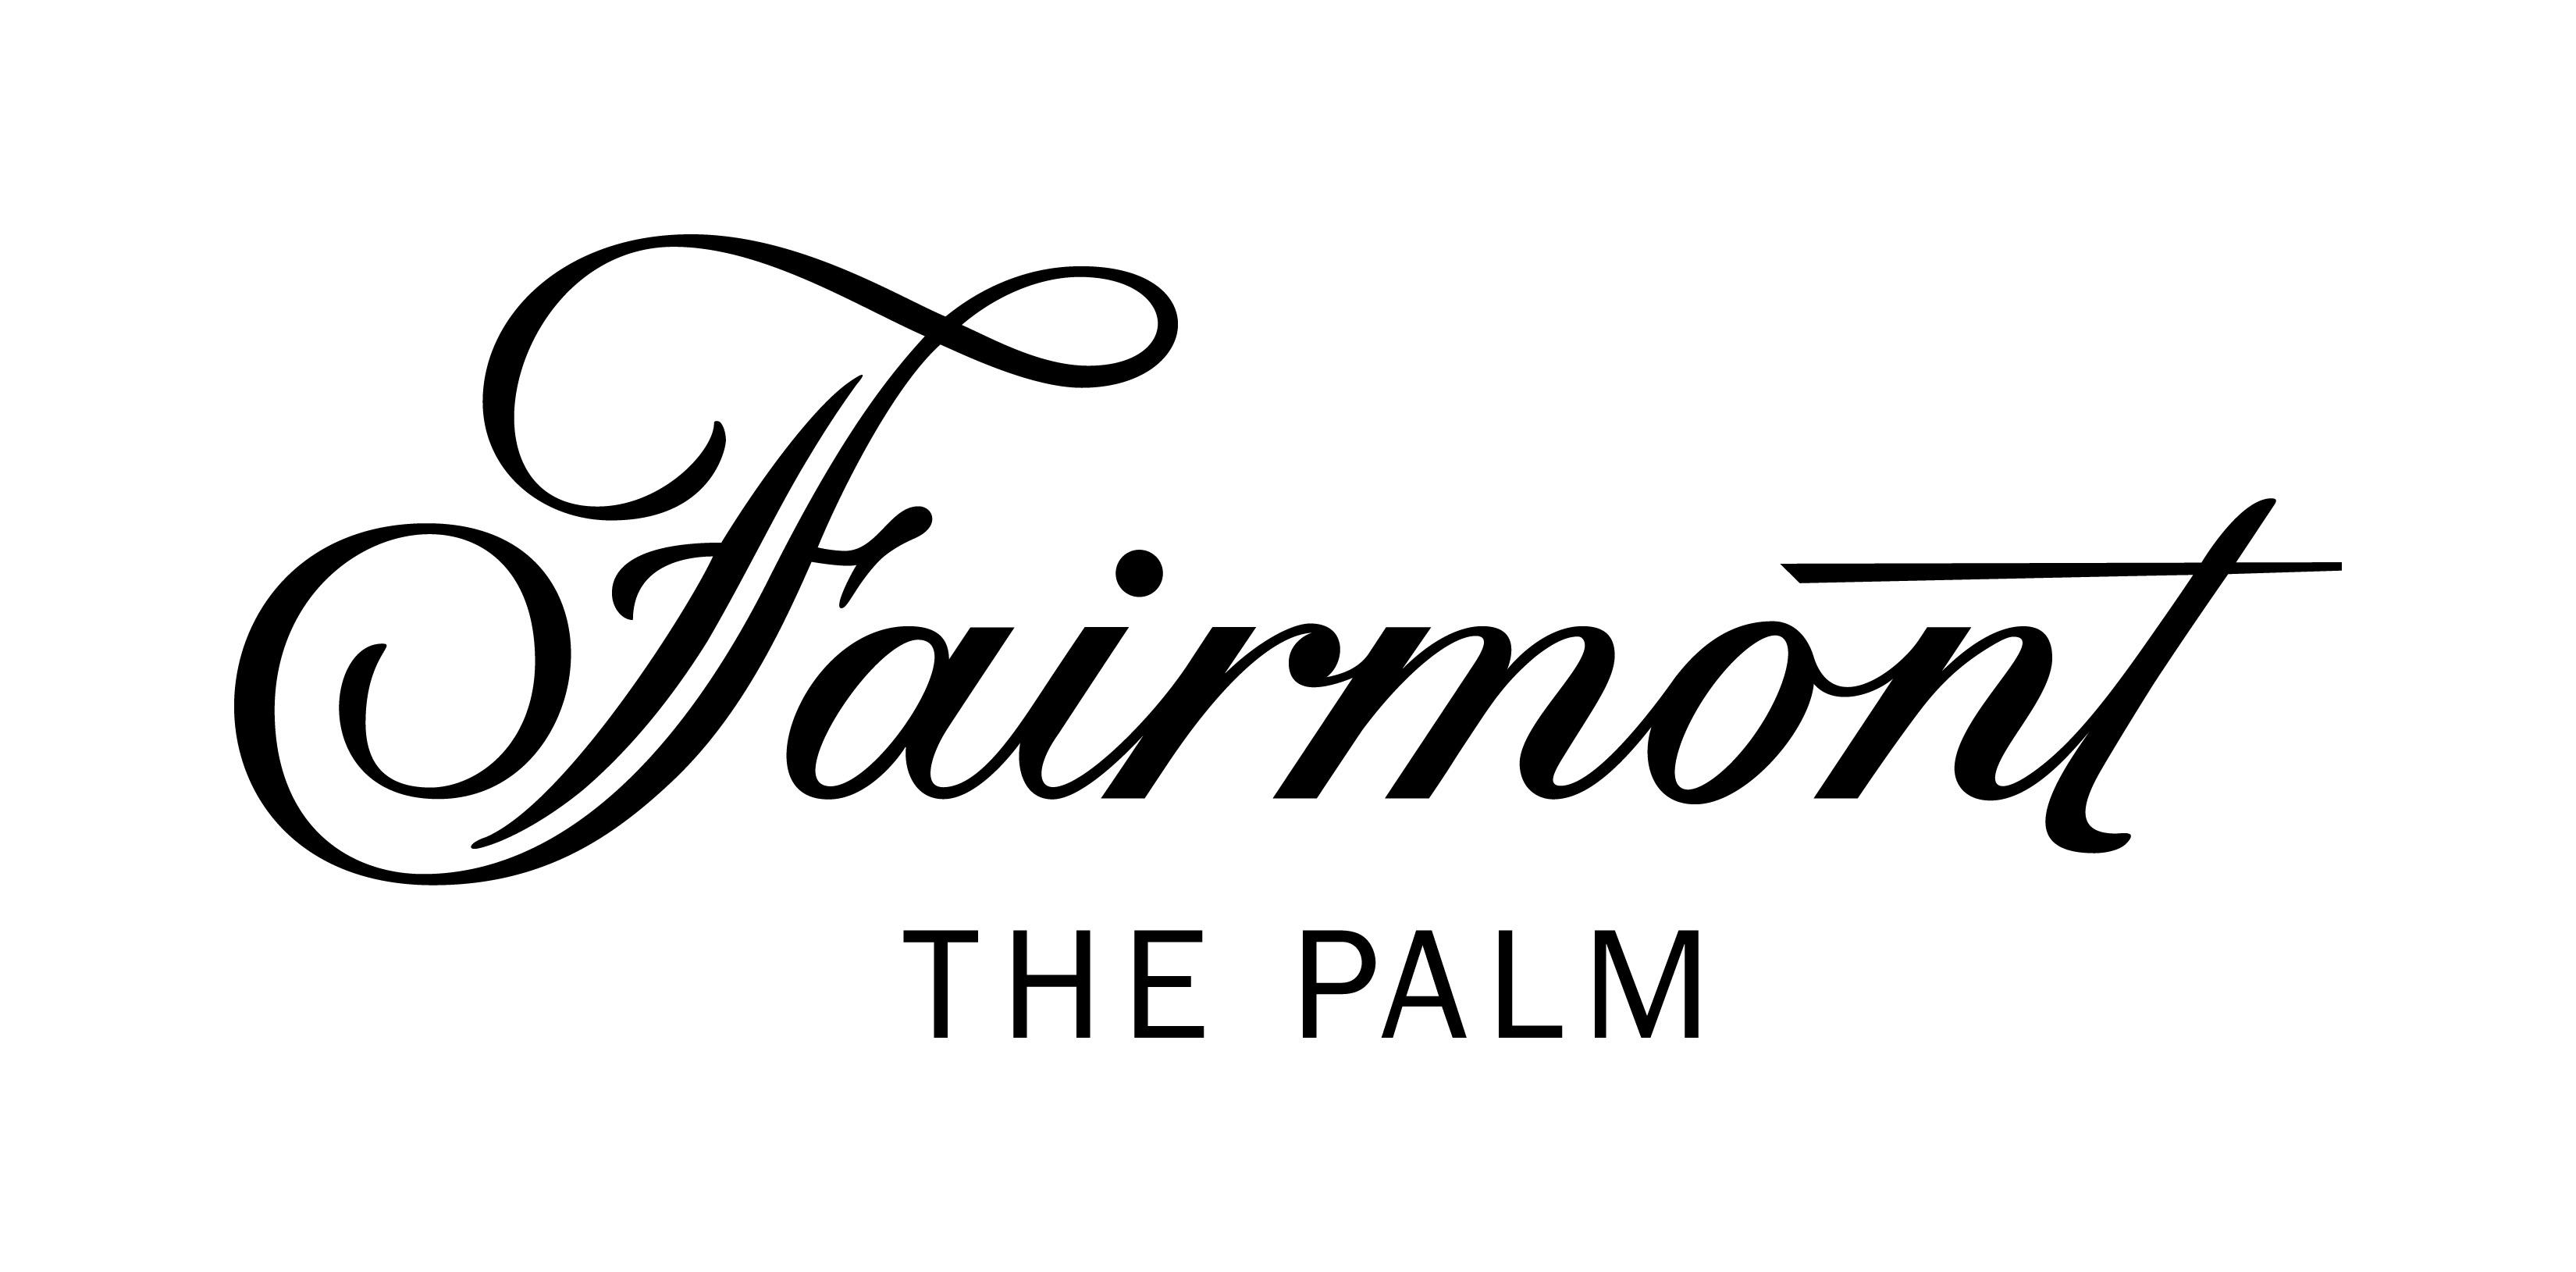 Farimont Logo - Fairmont The Palm logo in black 2015 - Inside The Closet